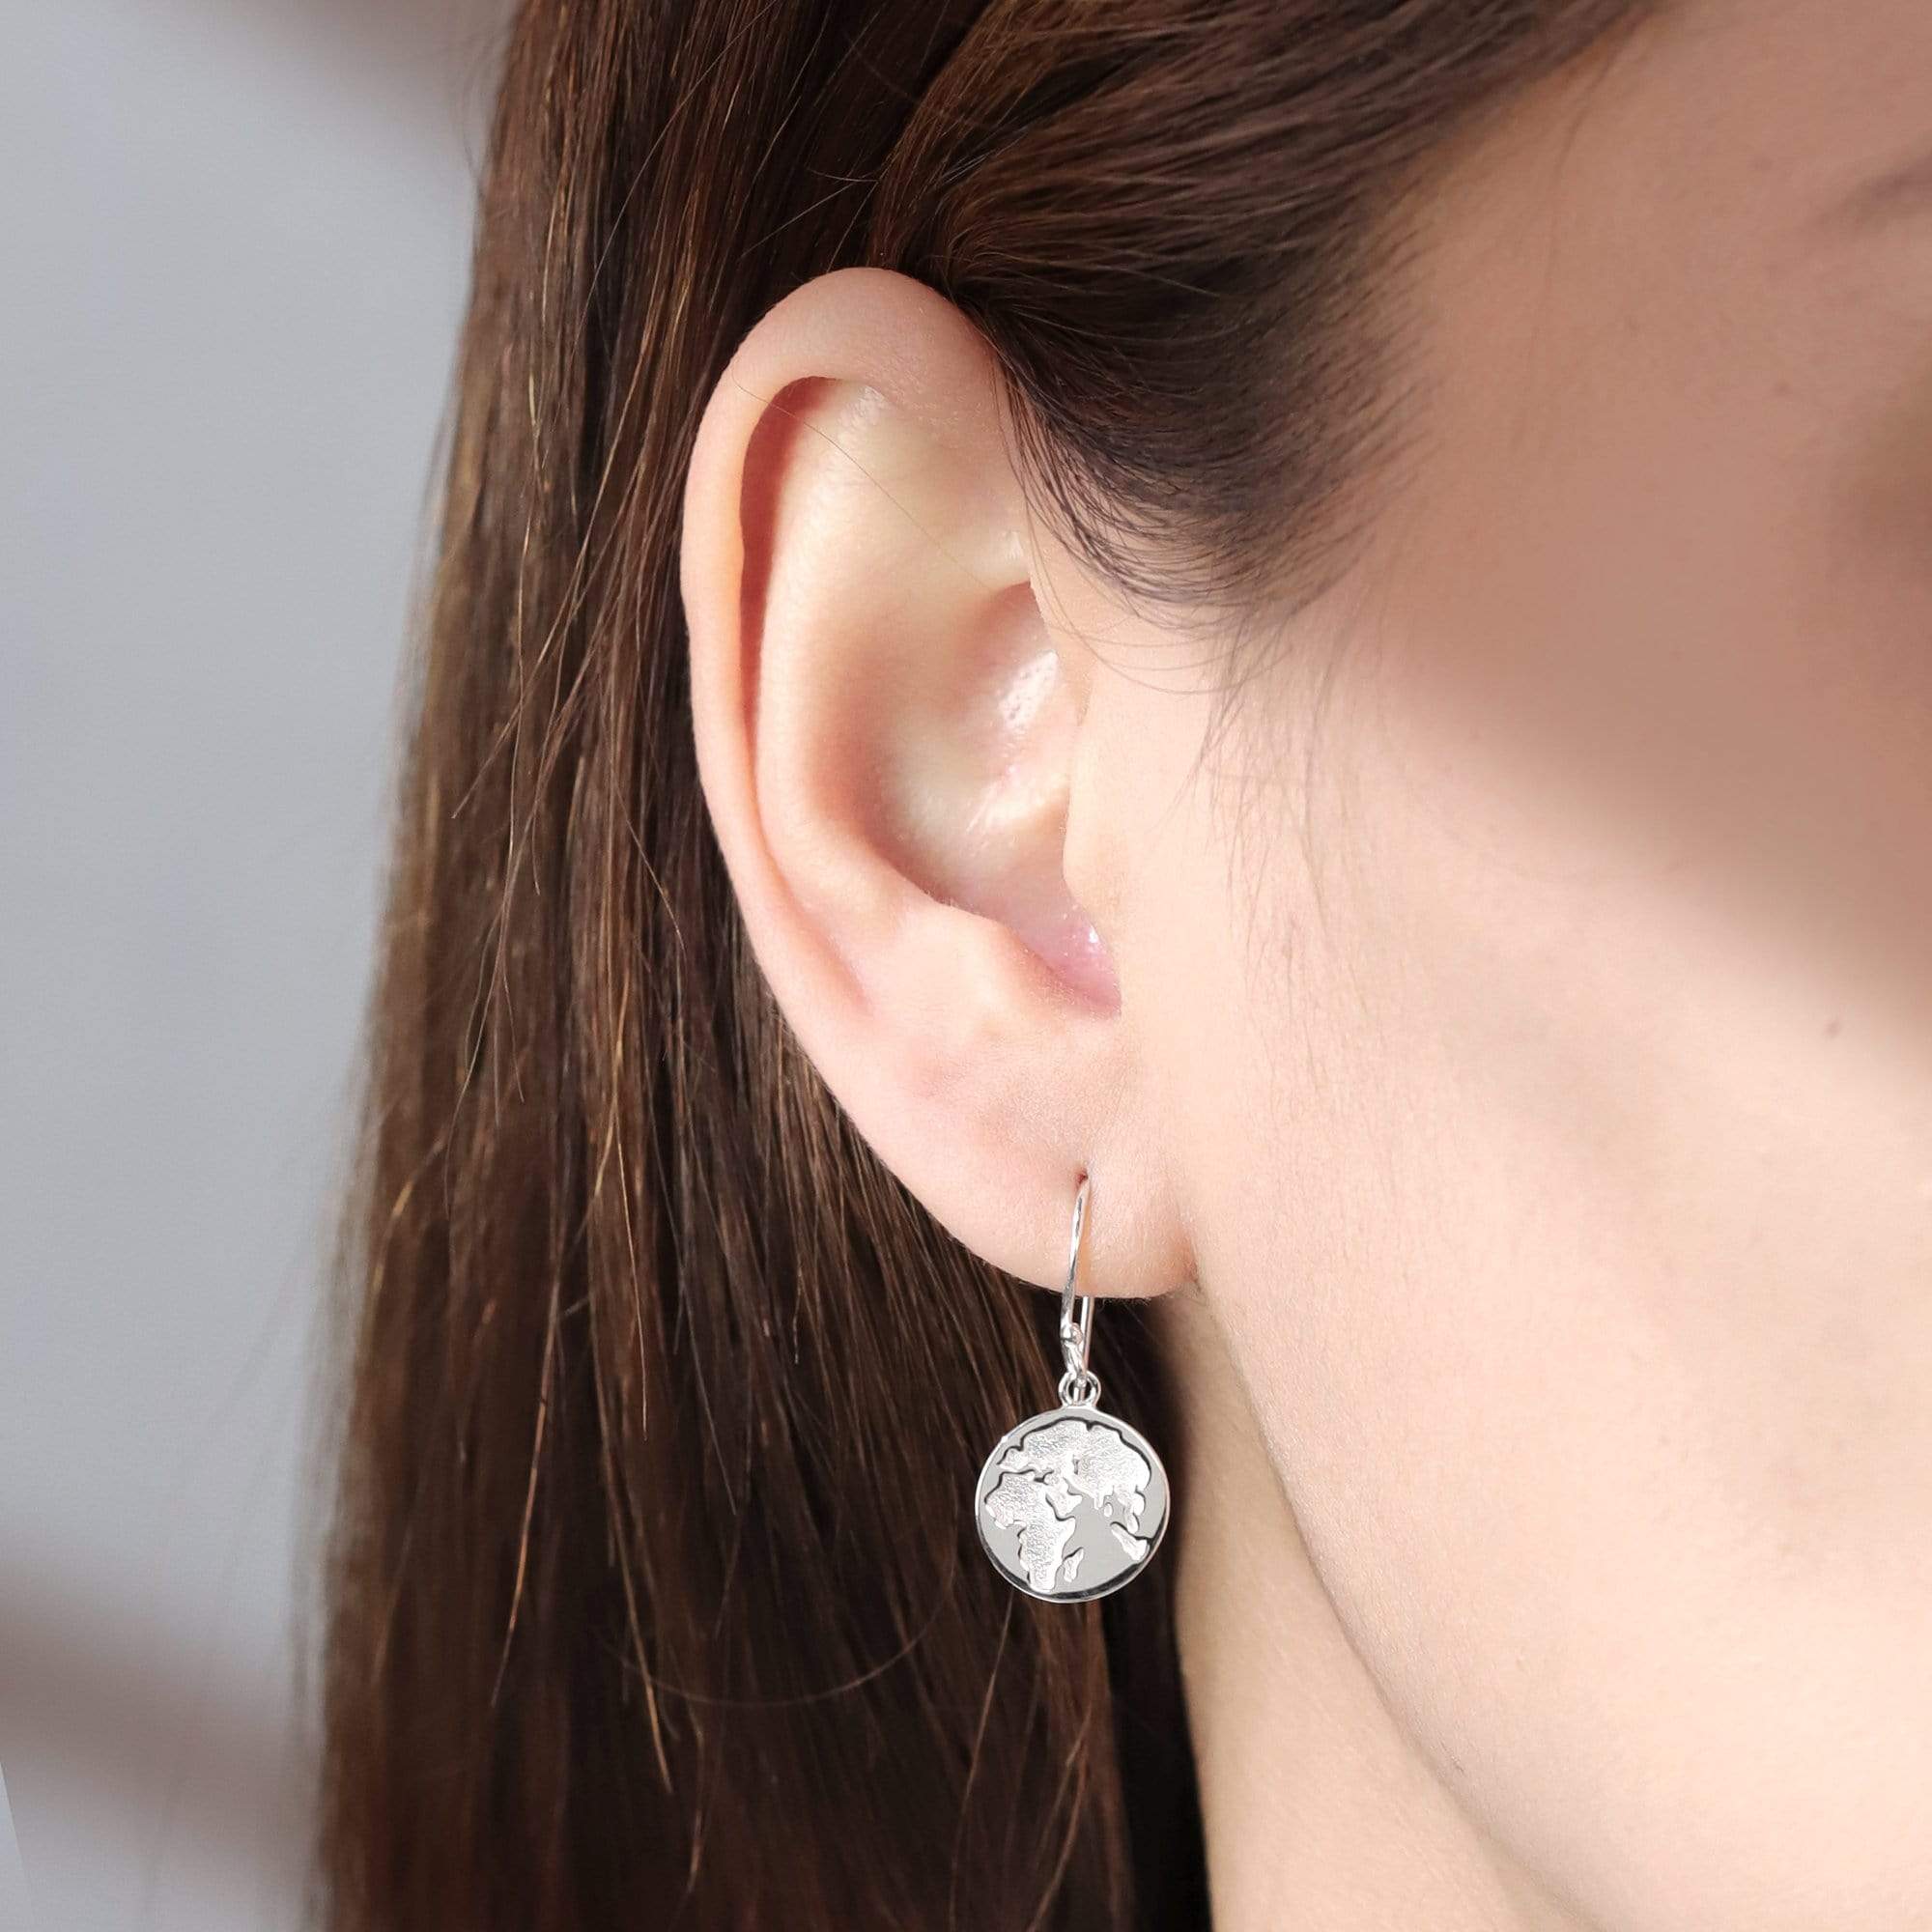 Boma Jewelry Earrings +Planet Earth Drop Earrings (Archived)